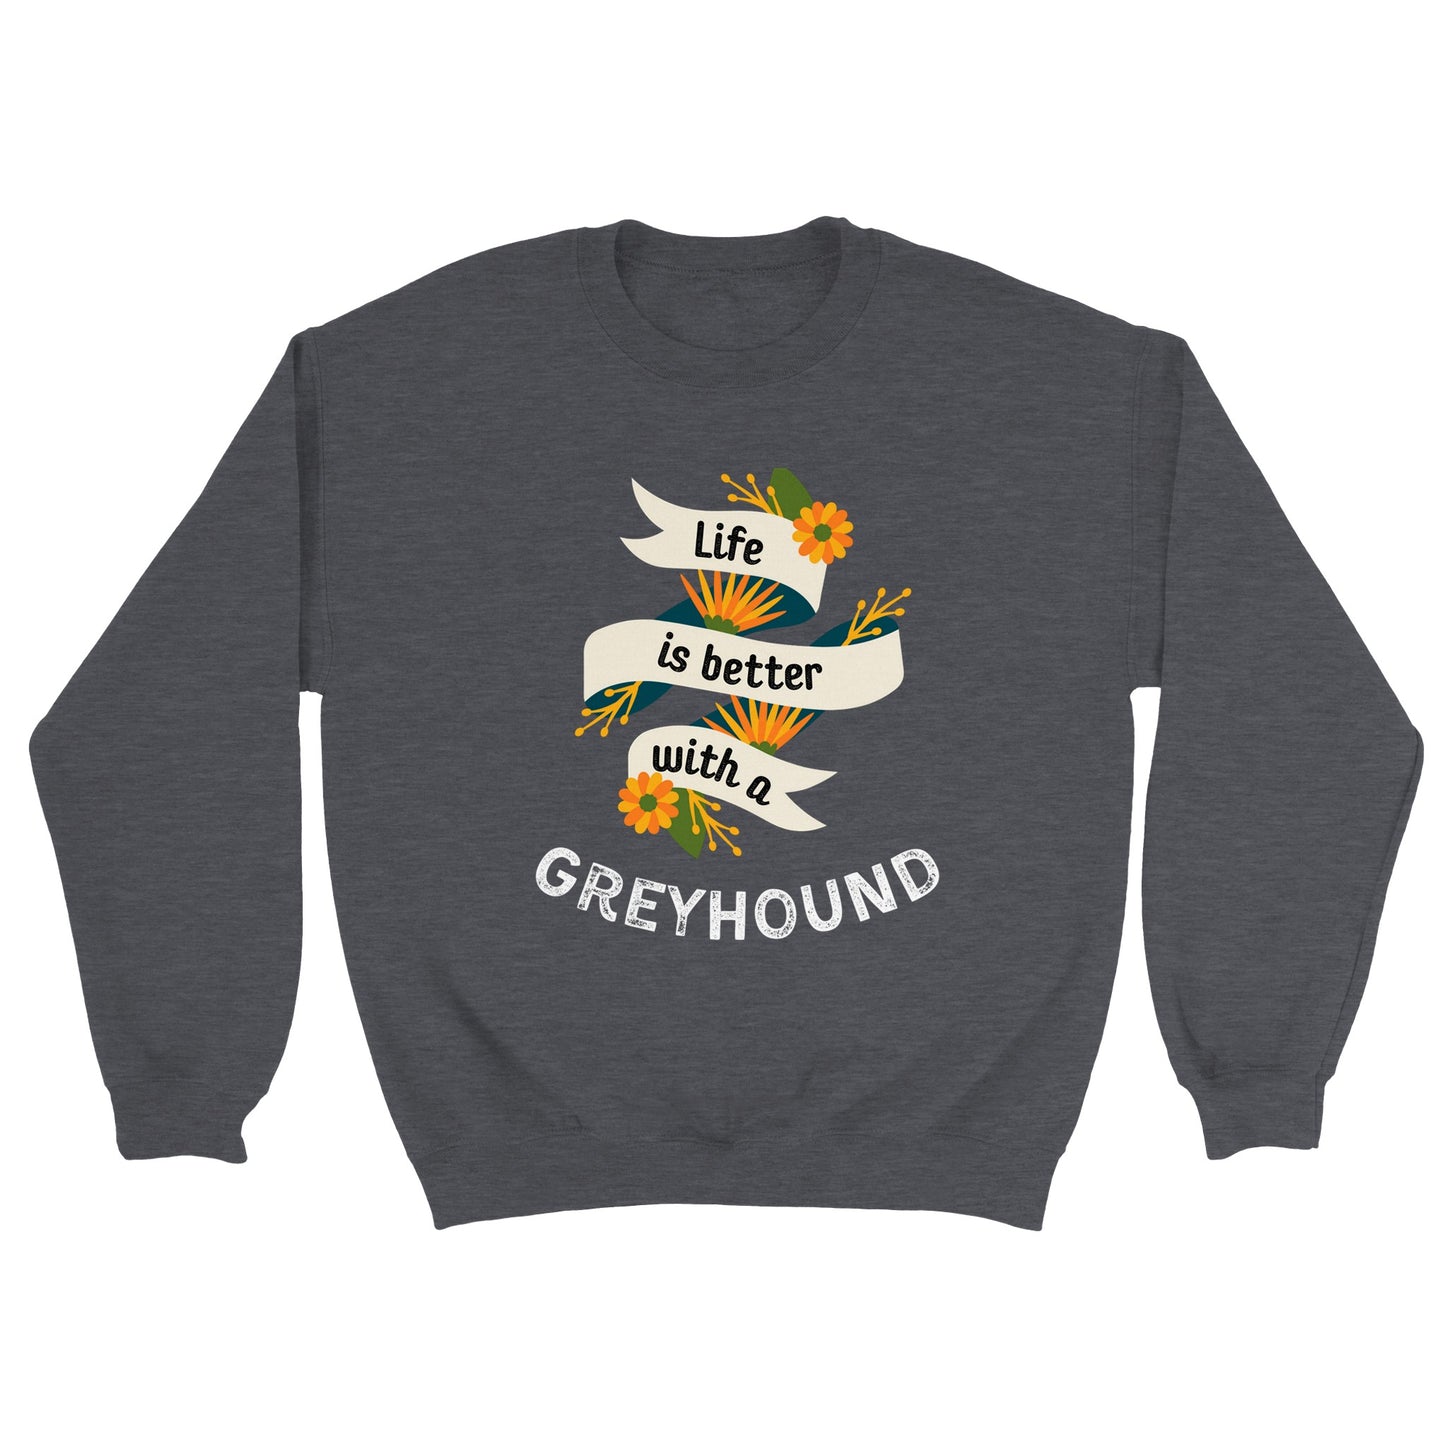 Greyhound Life Crewneck Sweatshirt